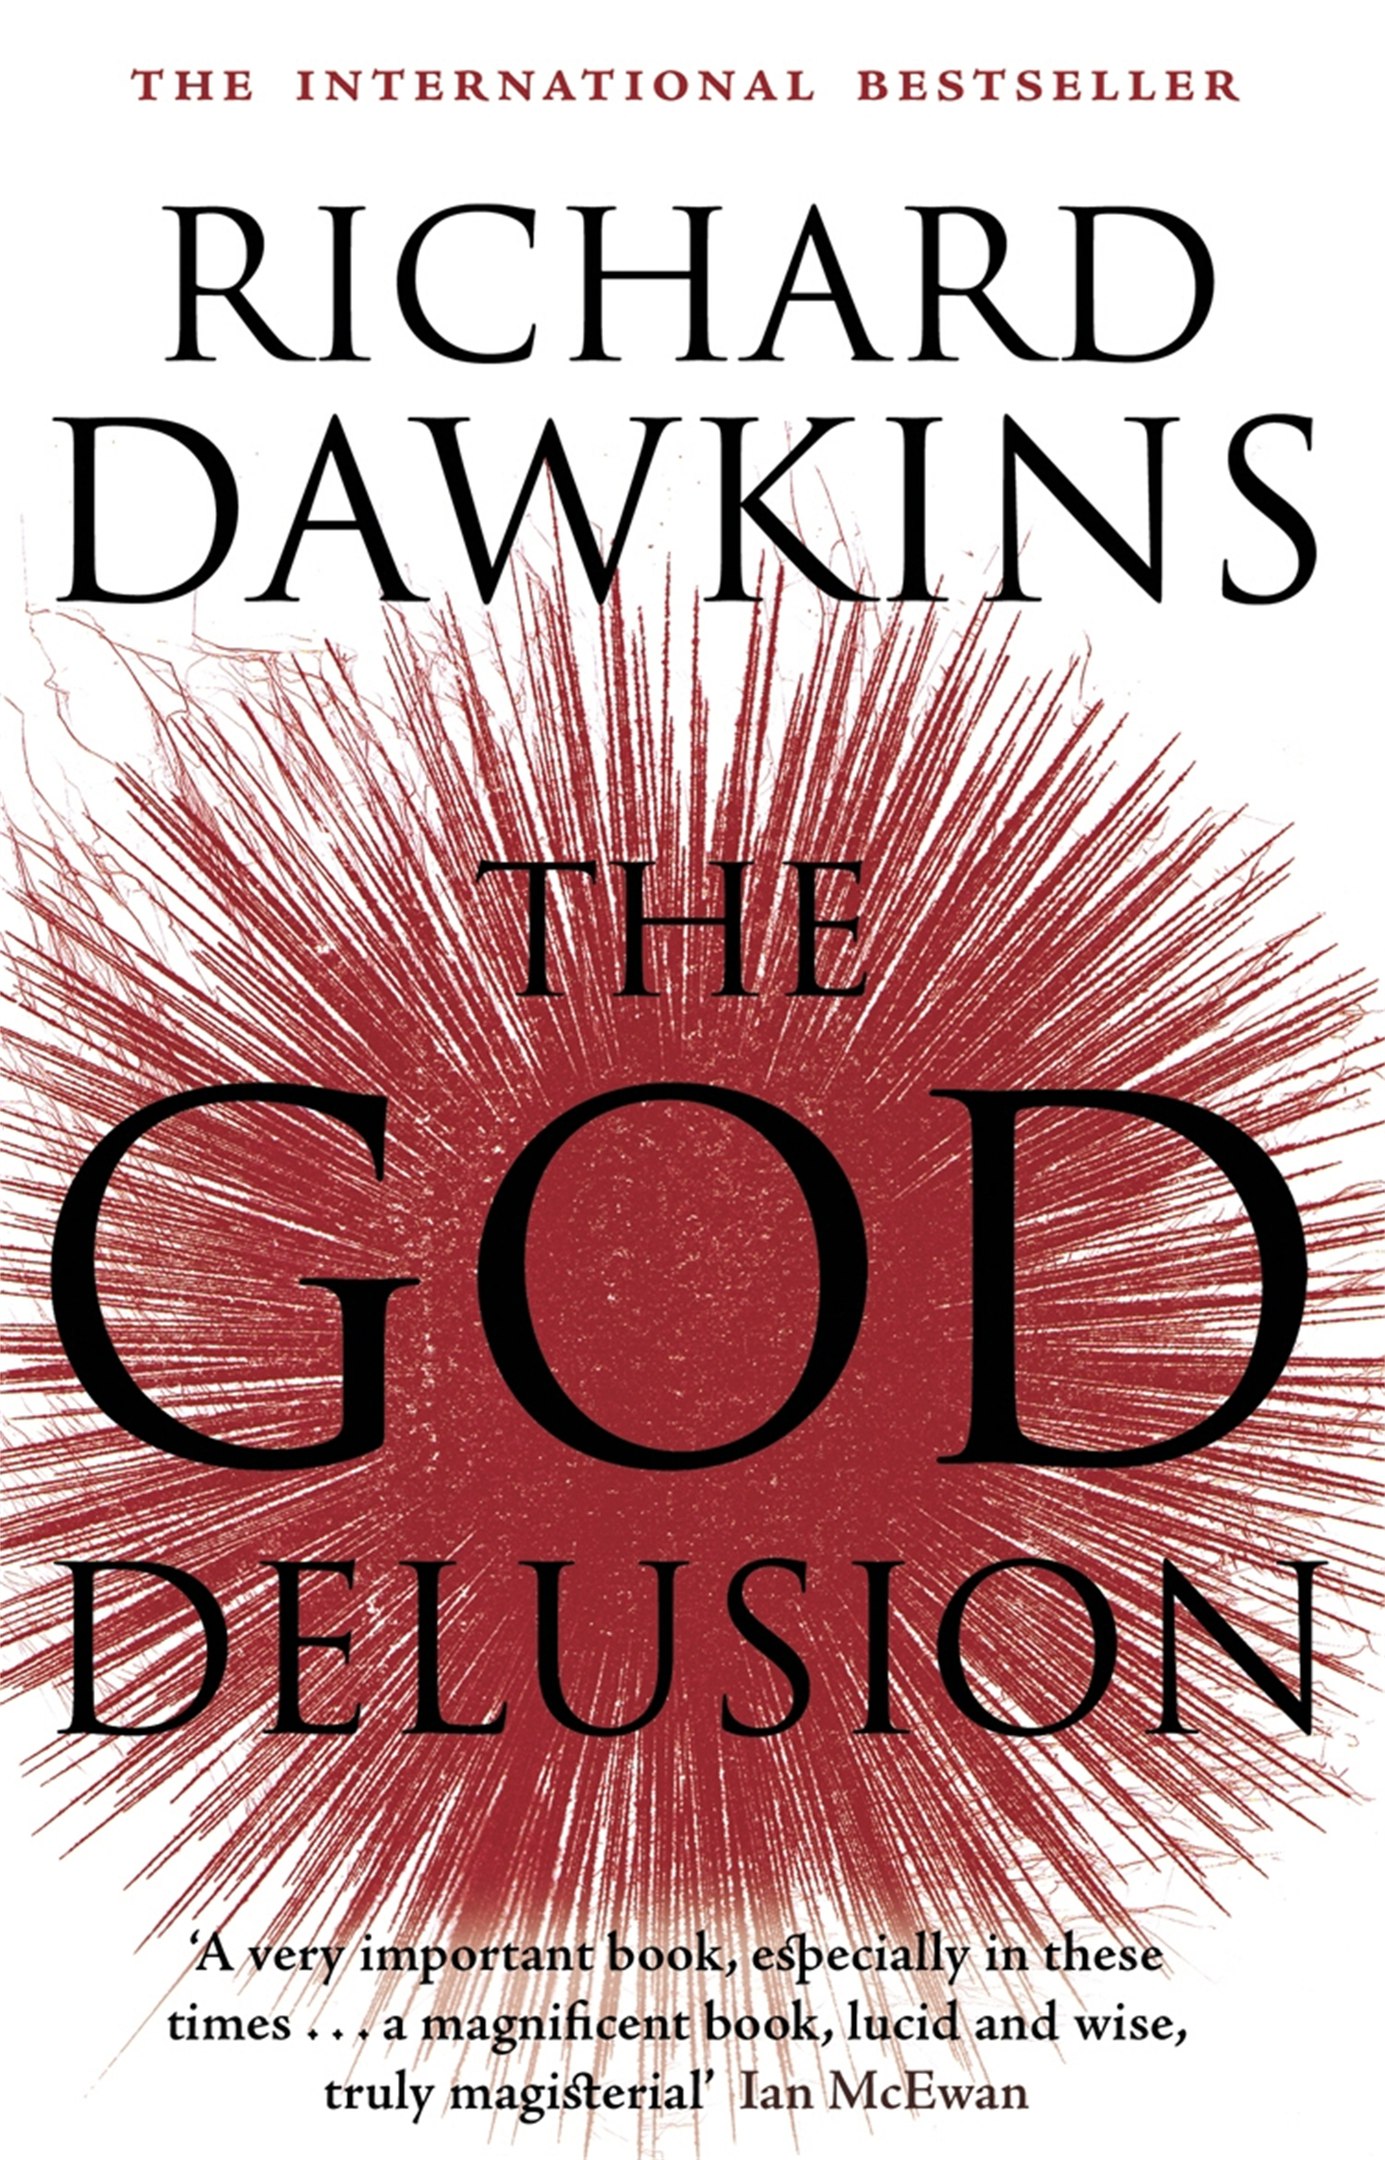 Richard Dawkins – The God Delusion